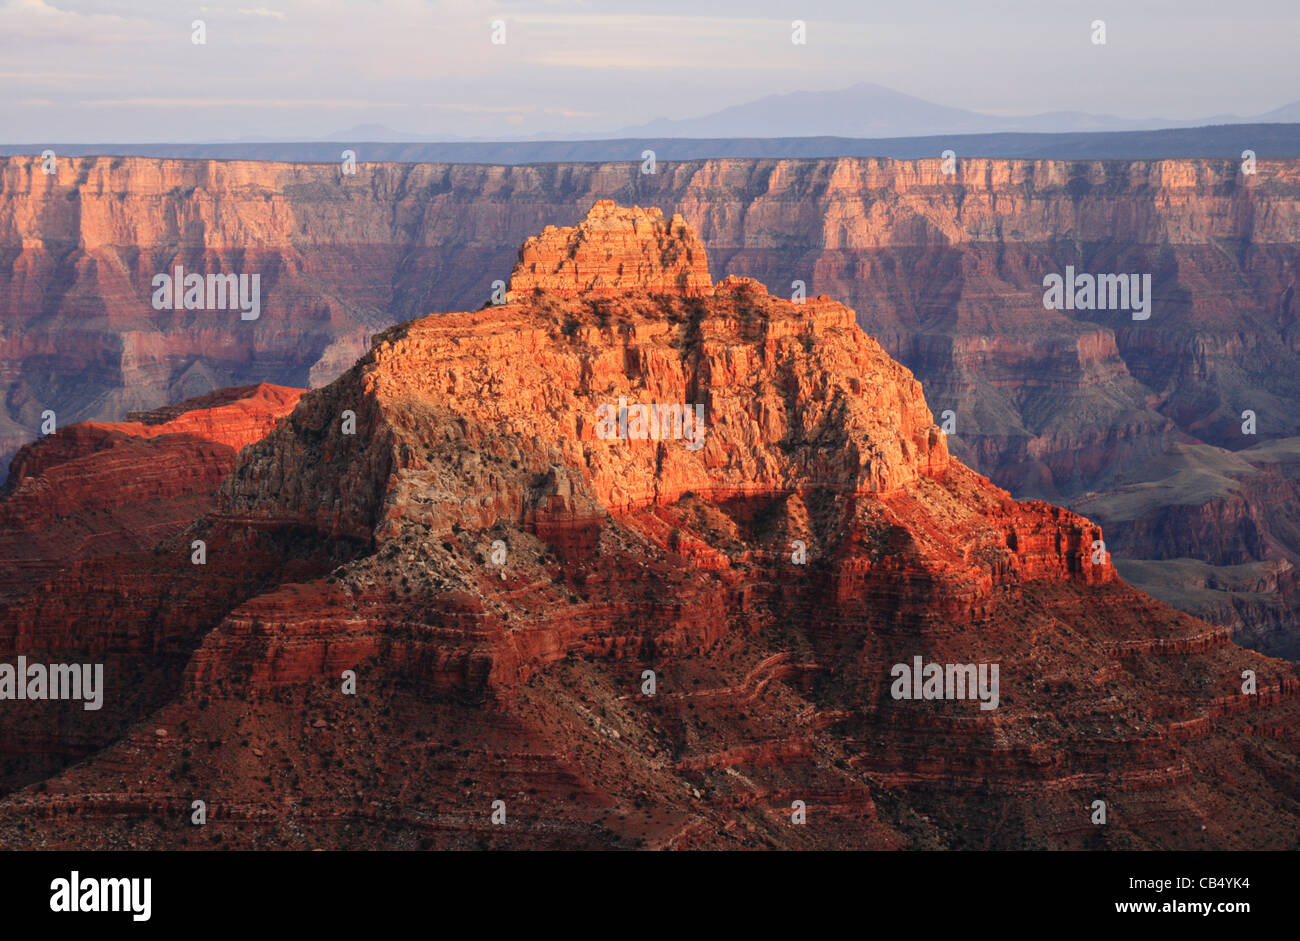 Vishnu Temple and the San Francisco Peaks from the North Rim of the Grand Canyon, Arizona Stock Photo